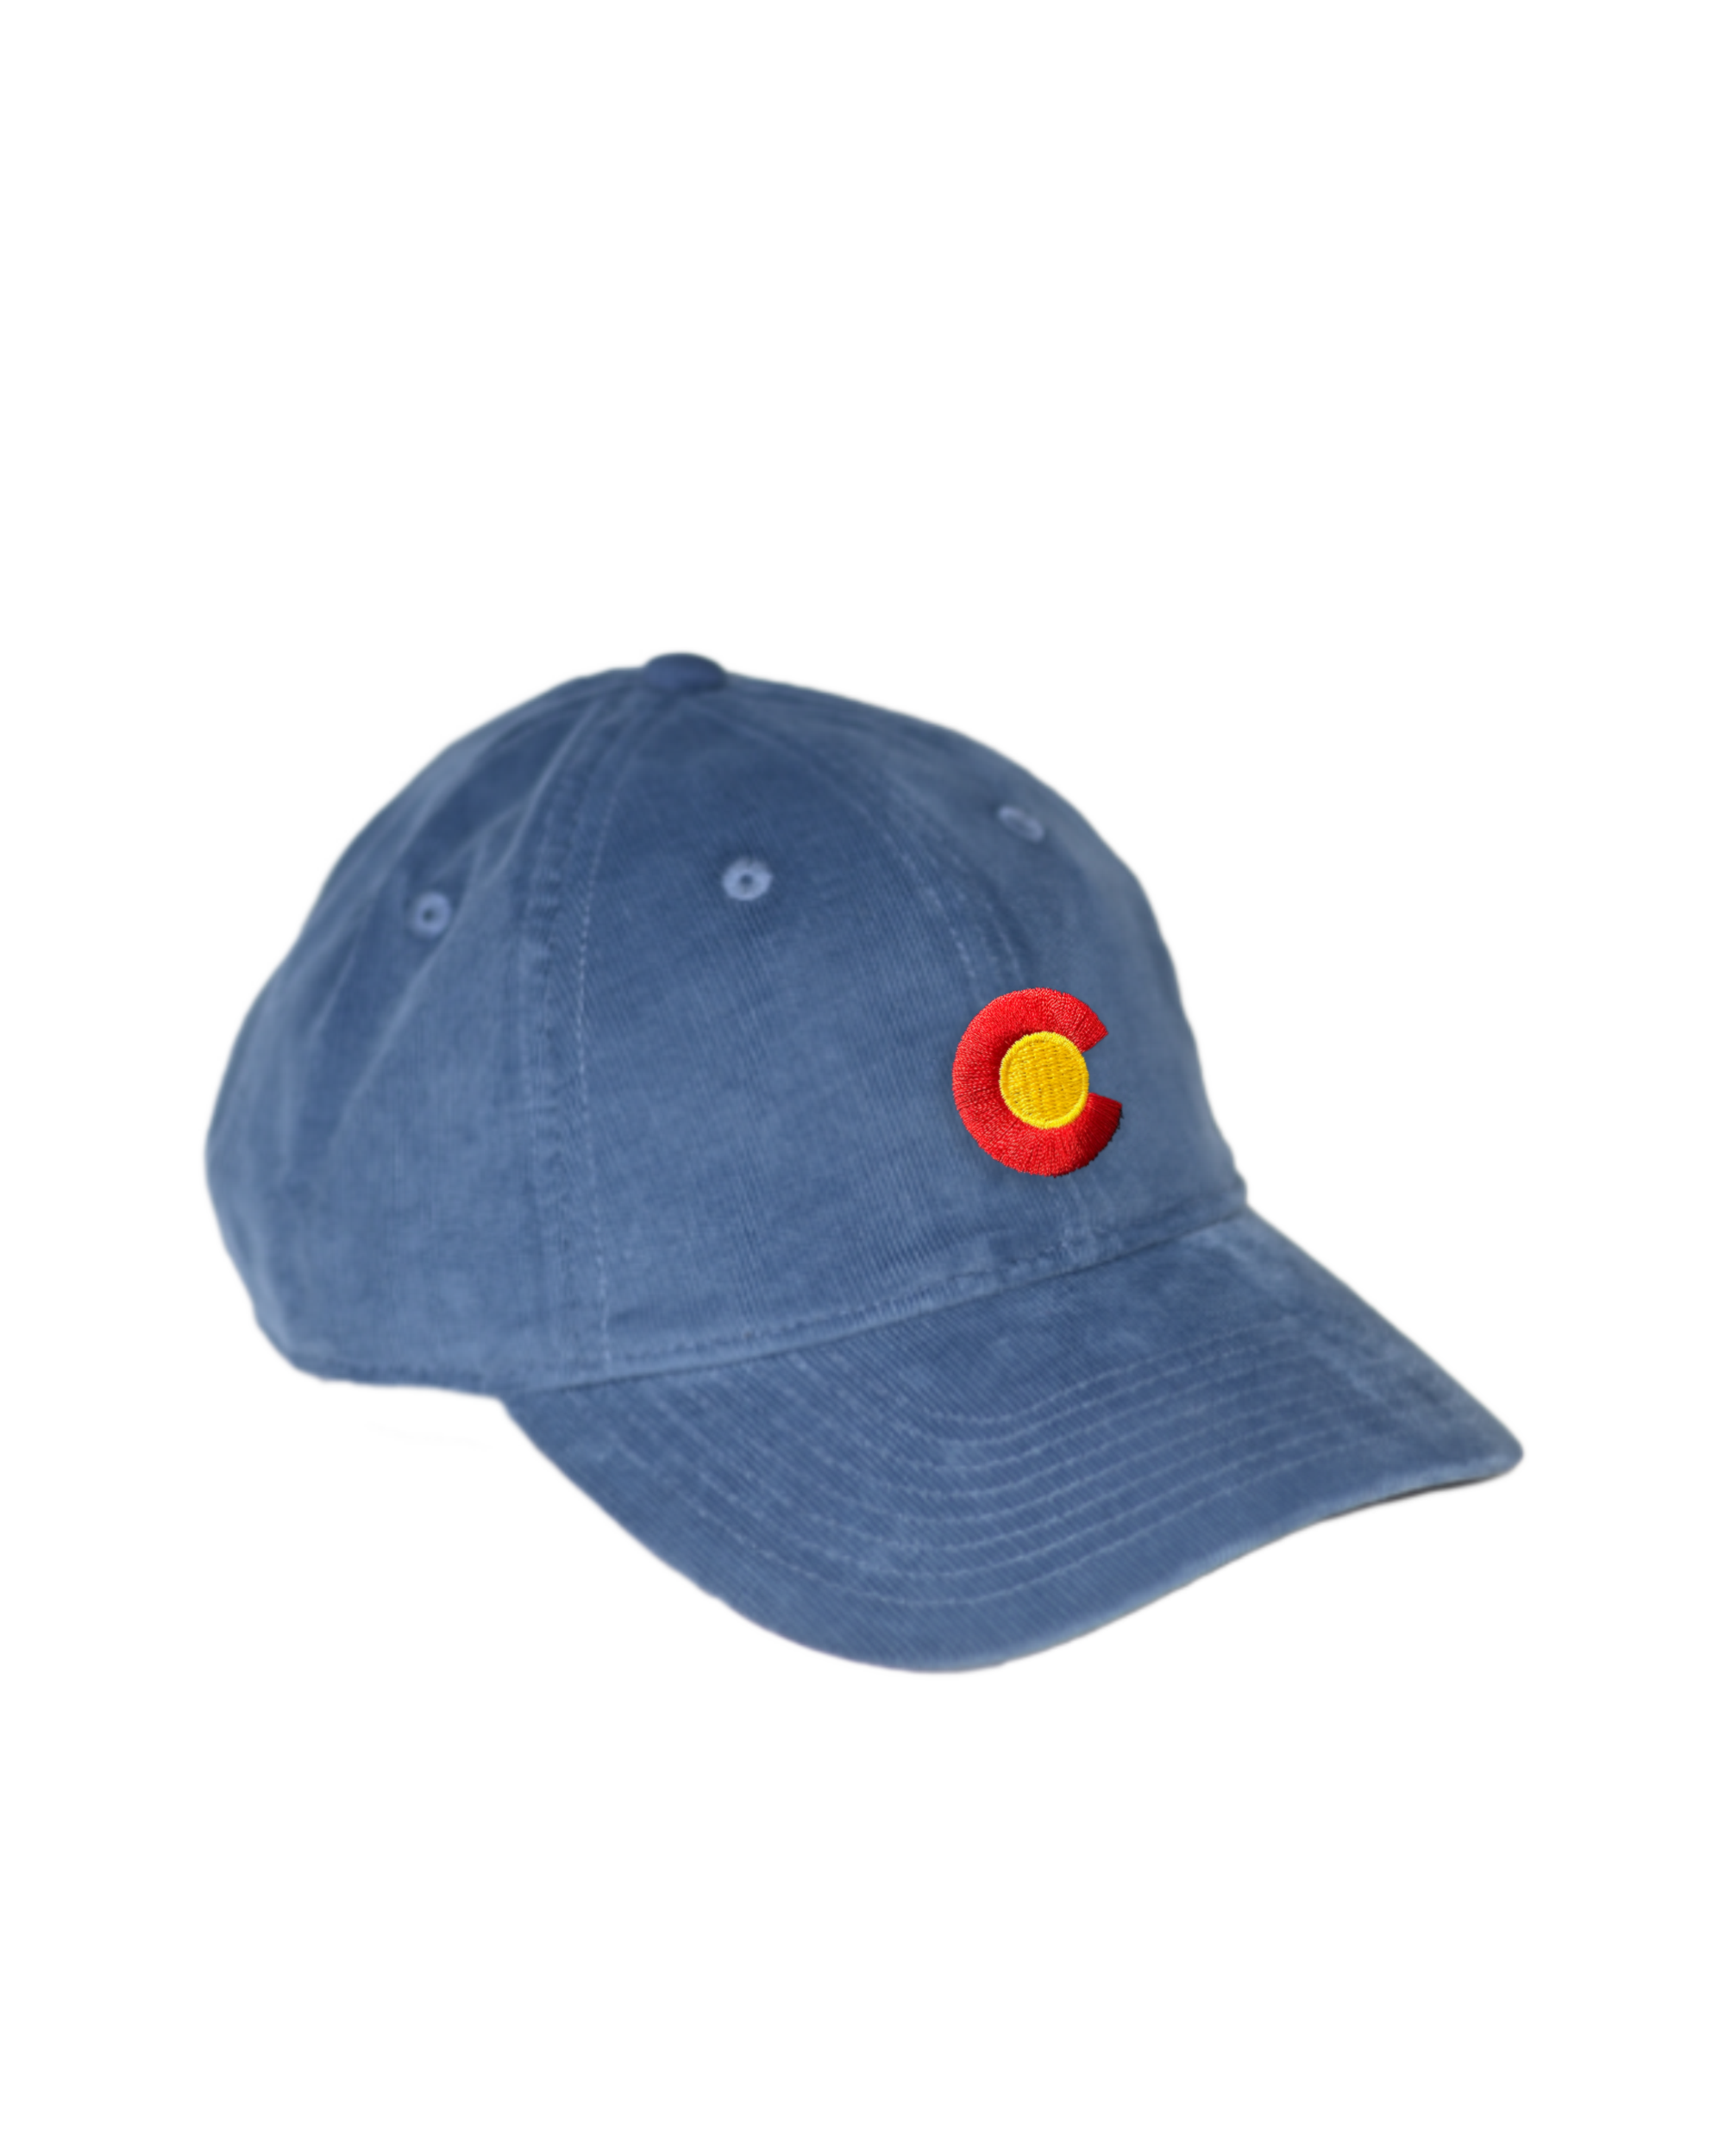 C Flag Blue Hat Hat